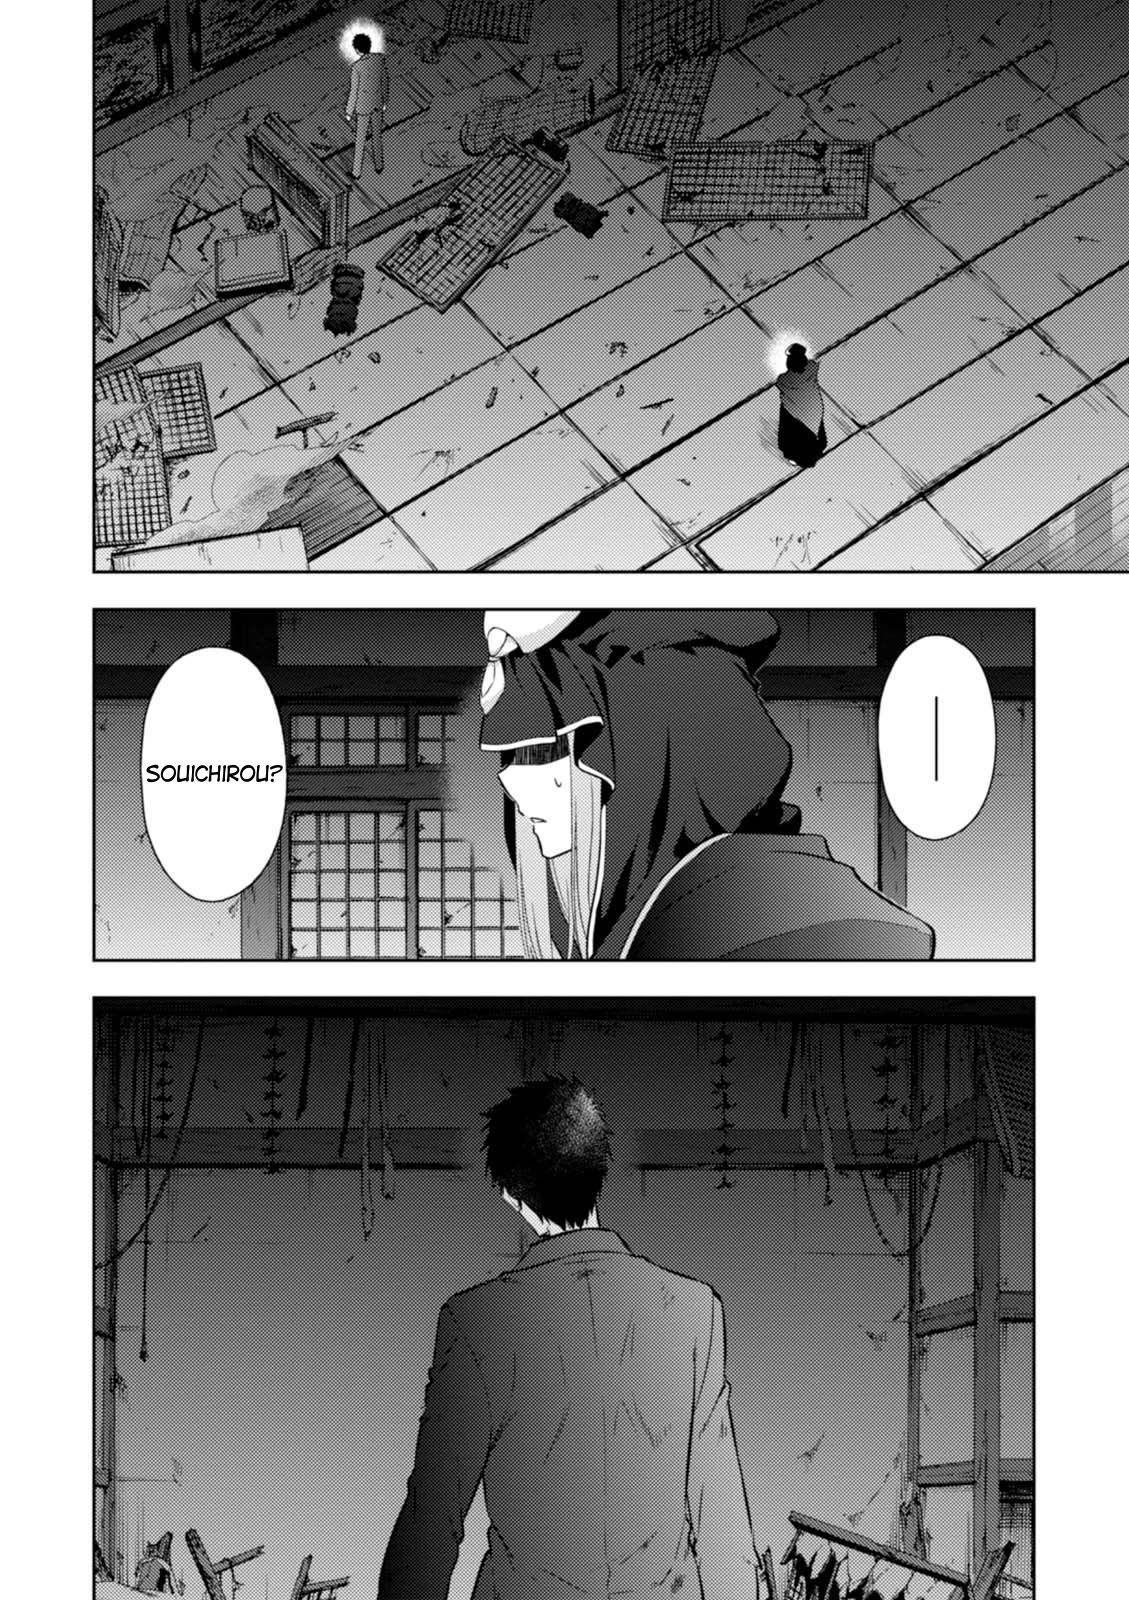 Read Fate/stay Night - Heaven's Feel Vol.5 Chapter 30 - Manganelo